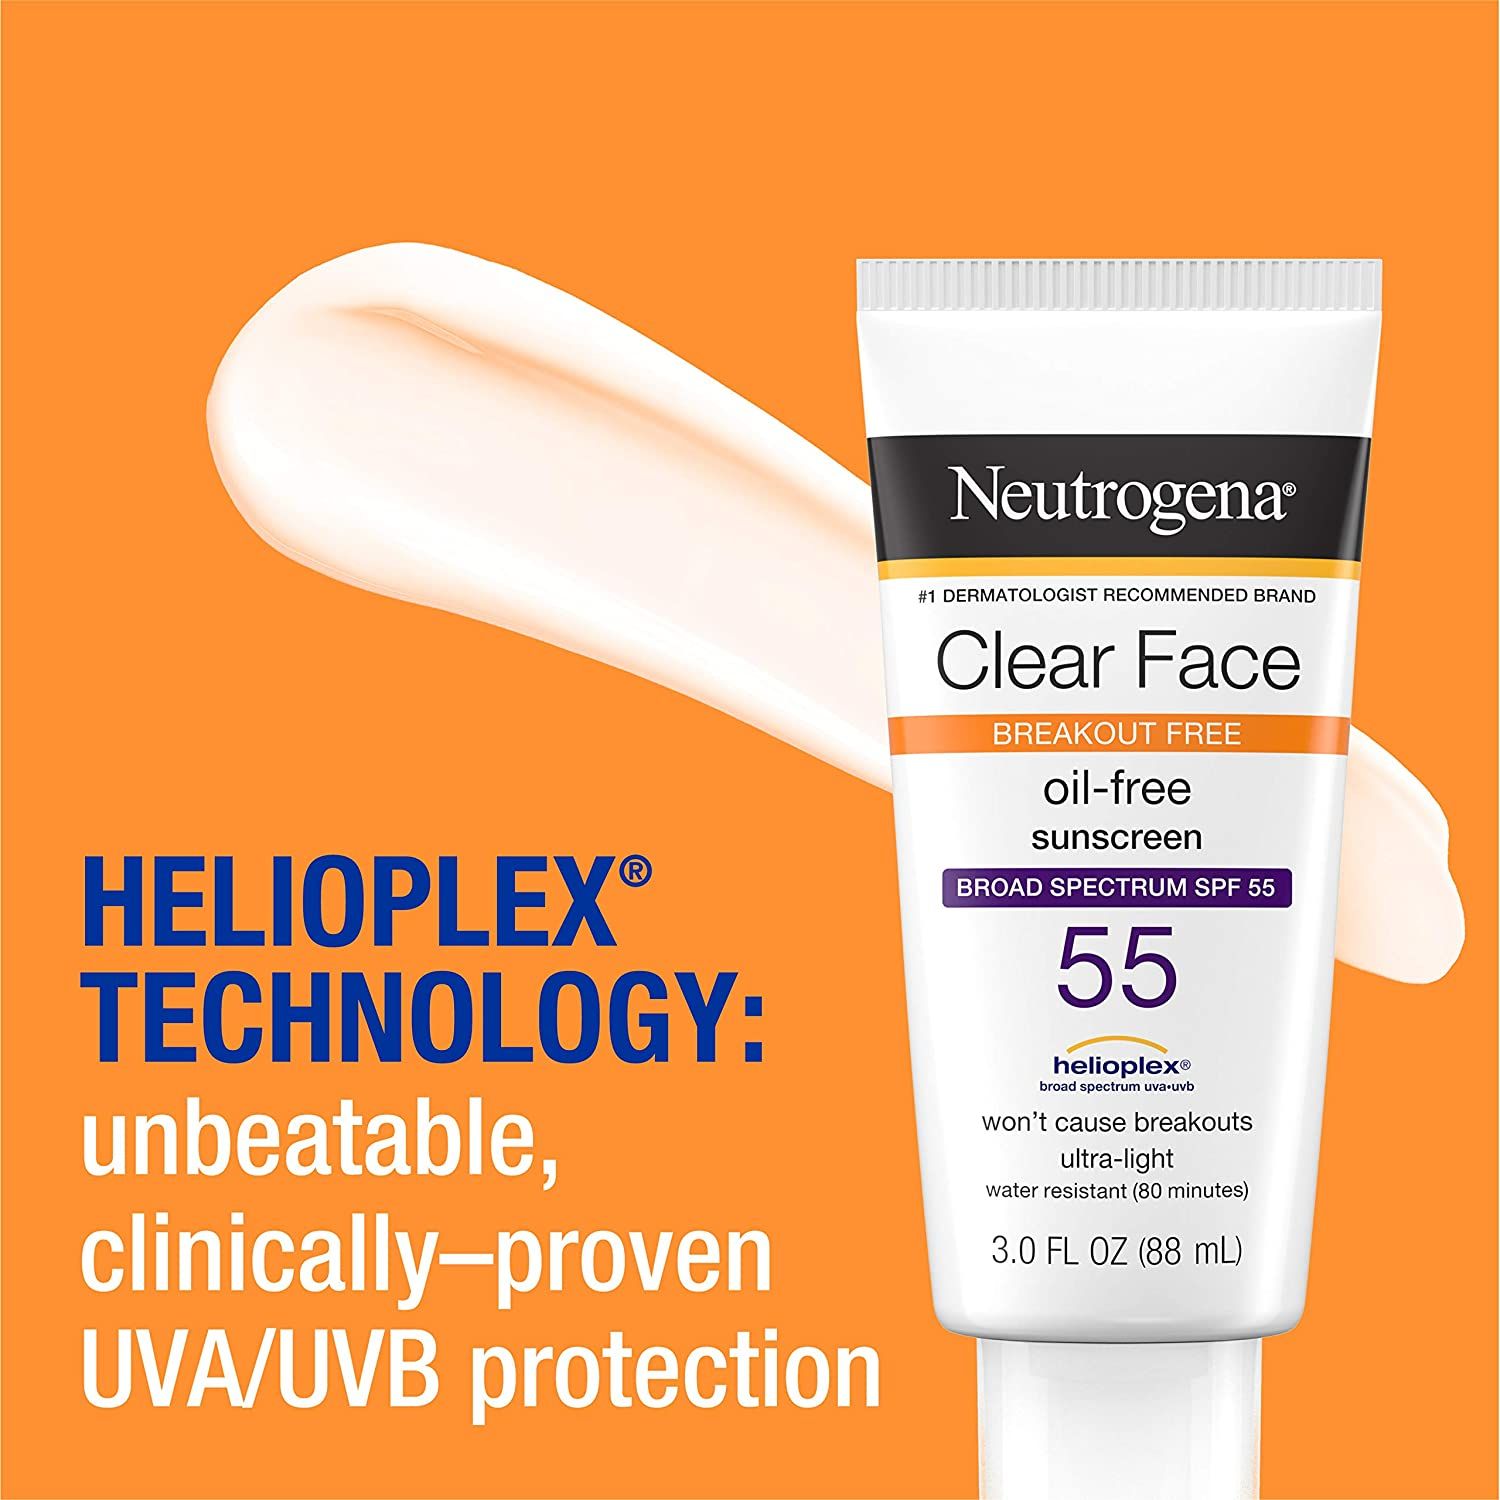 Neutrogena Clear Face Break-Out Free Liquid-Lotion Sunscreen, SPF 55 - 3 oz